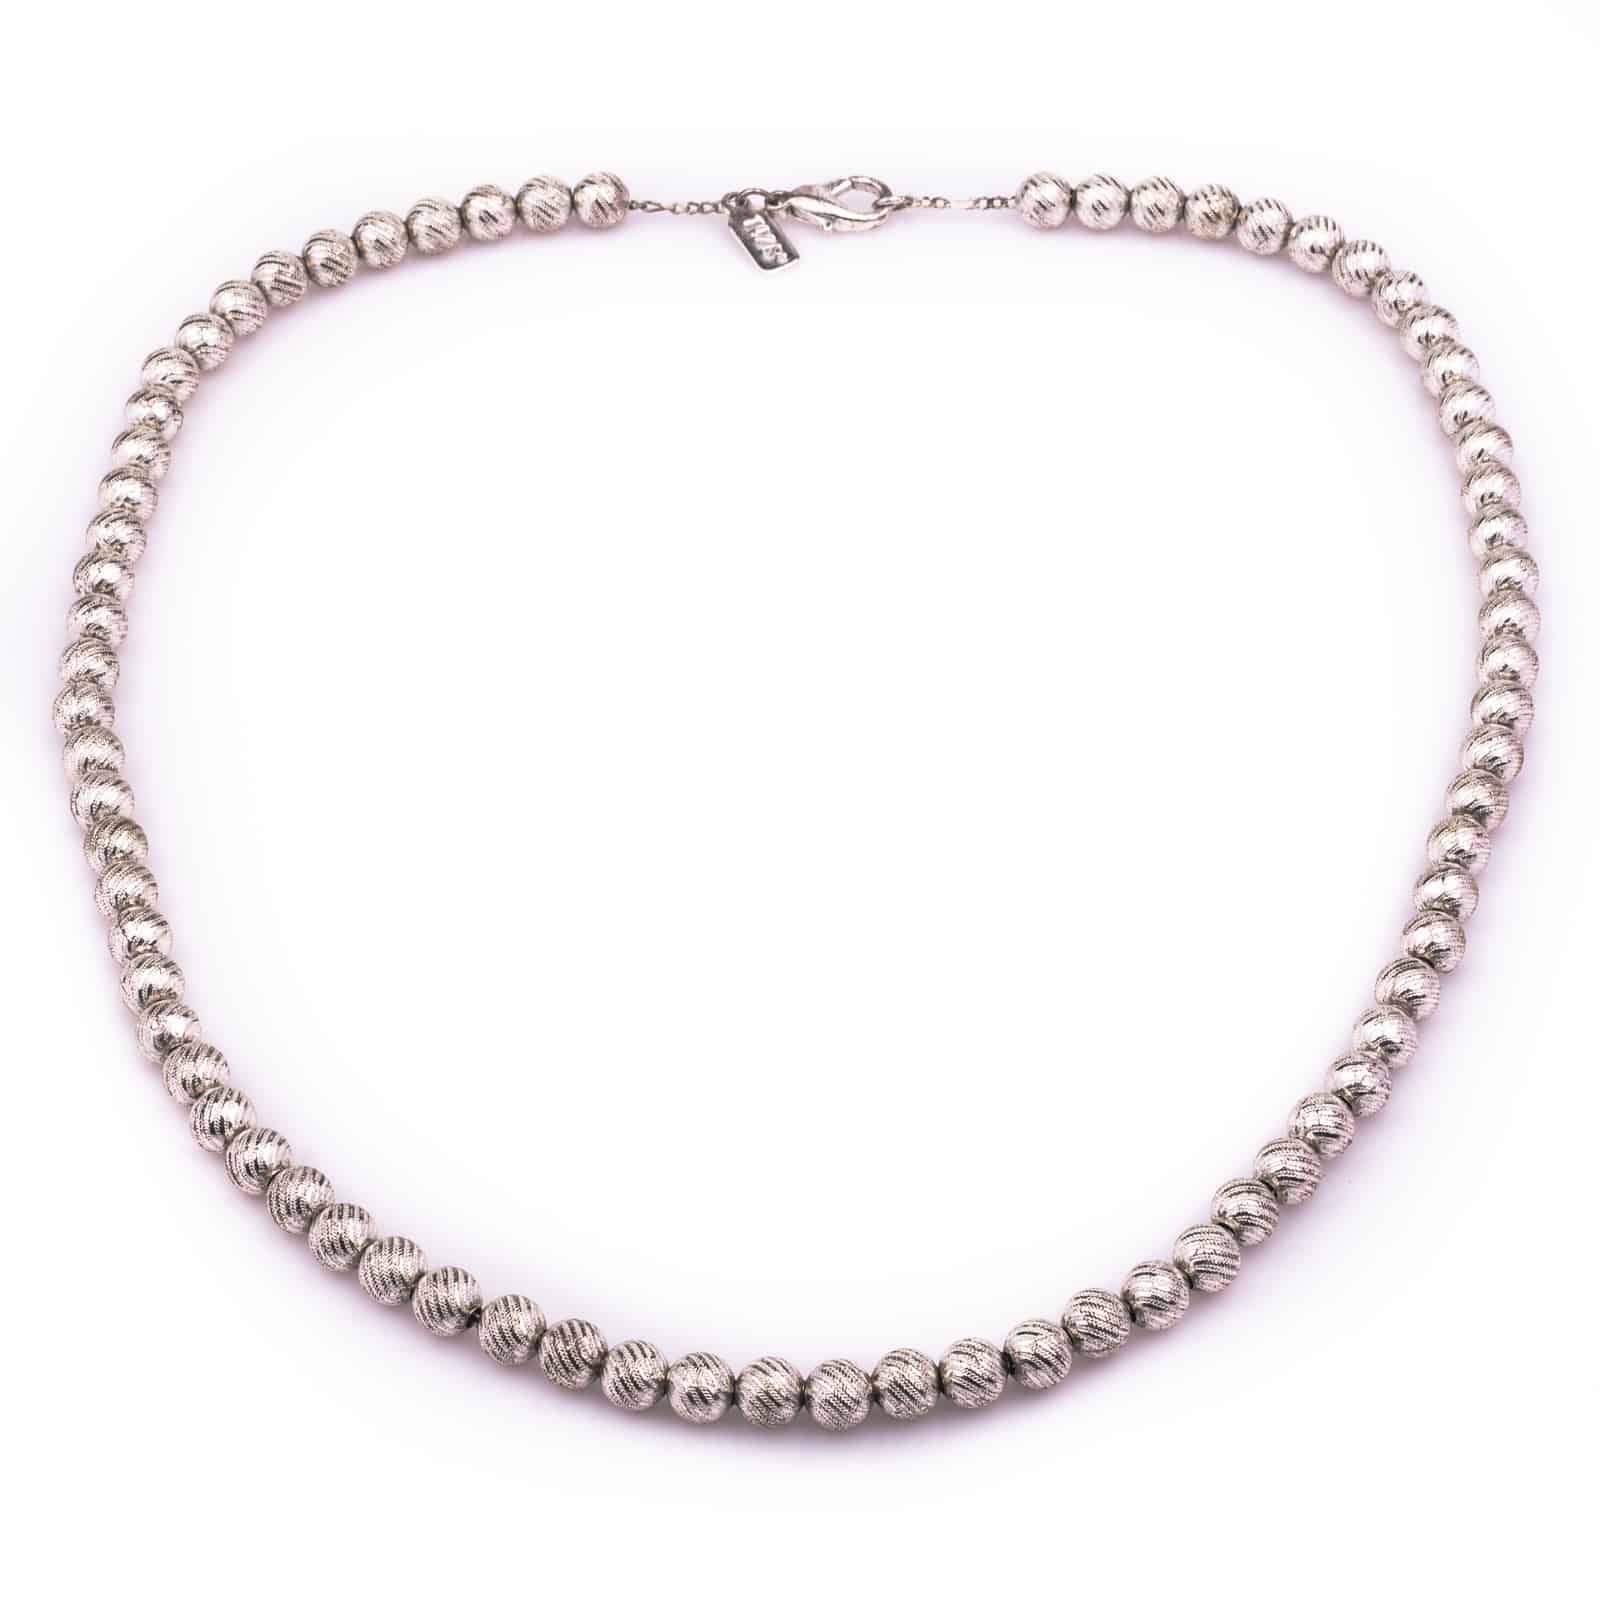 Metallperlenkette-strukturierte-silberfarbene-Perlen